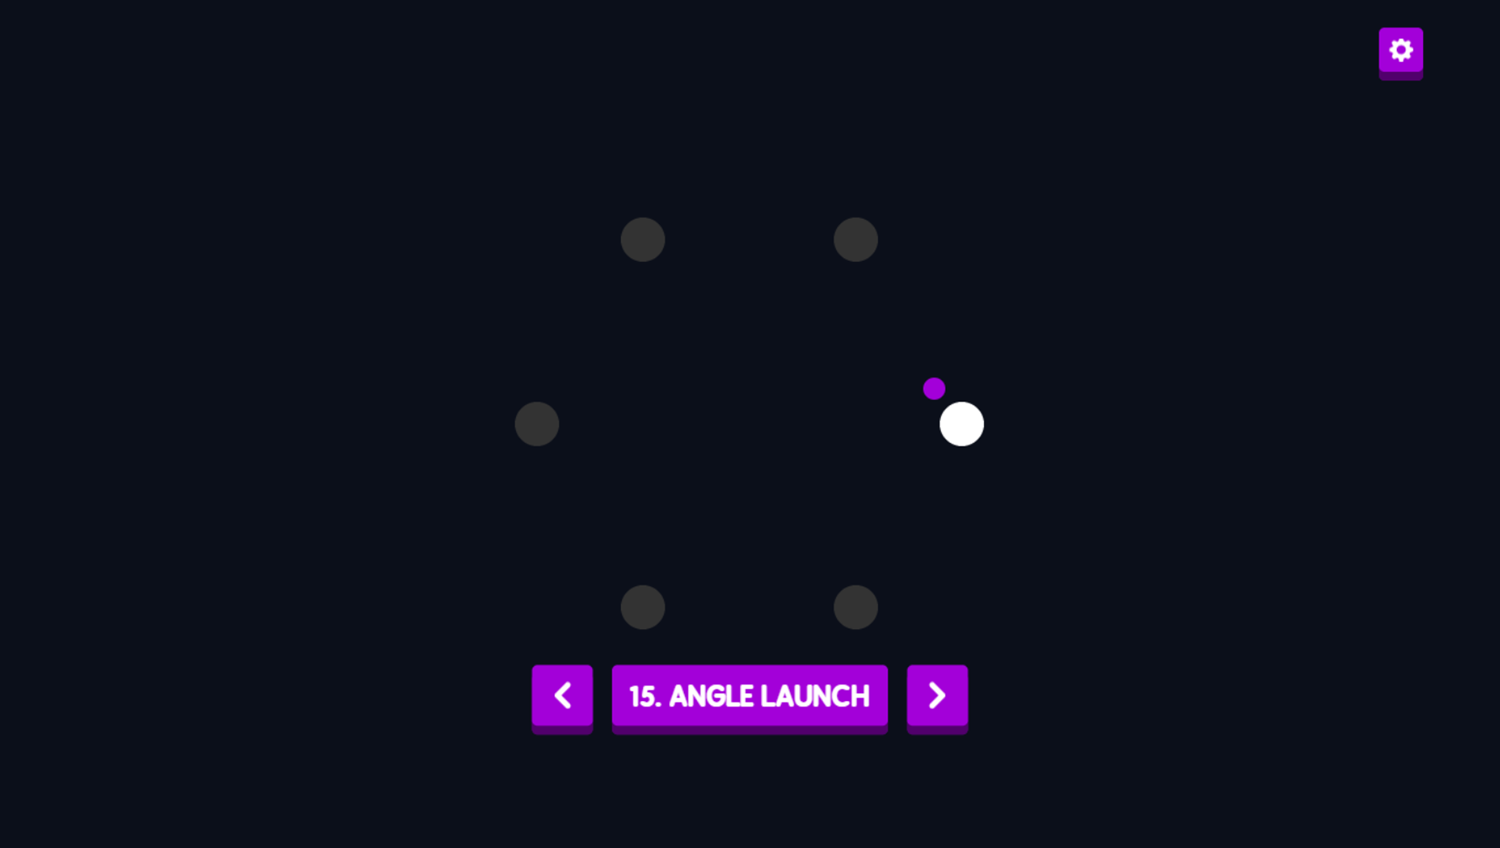 Mini Games Game 15 Angle Launch Screenshot.